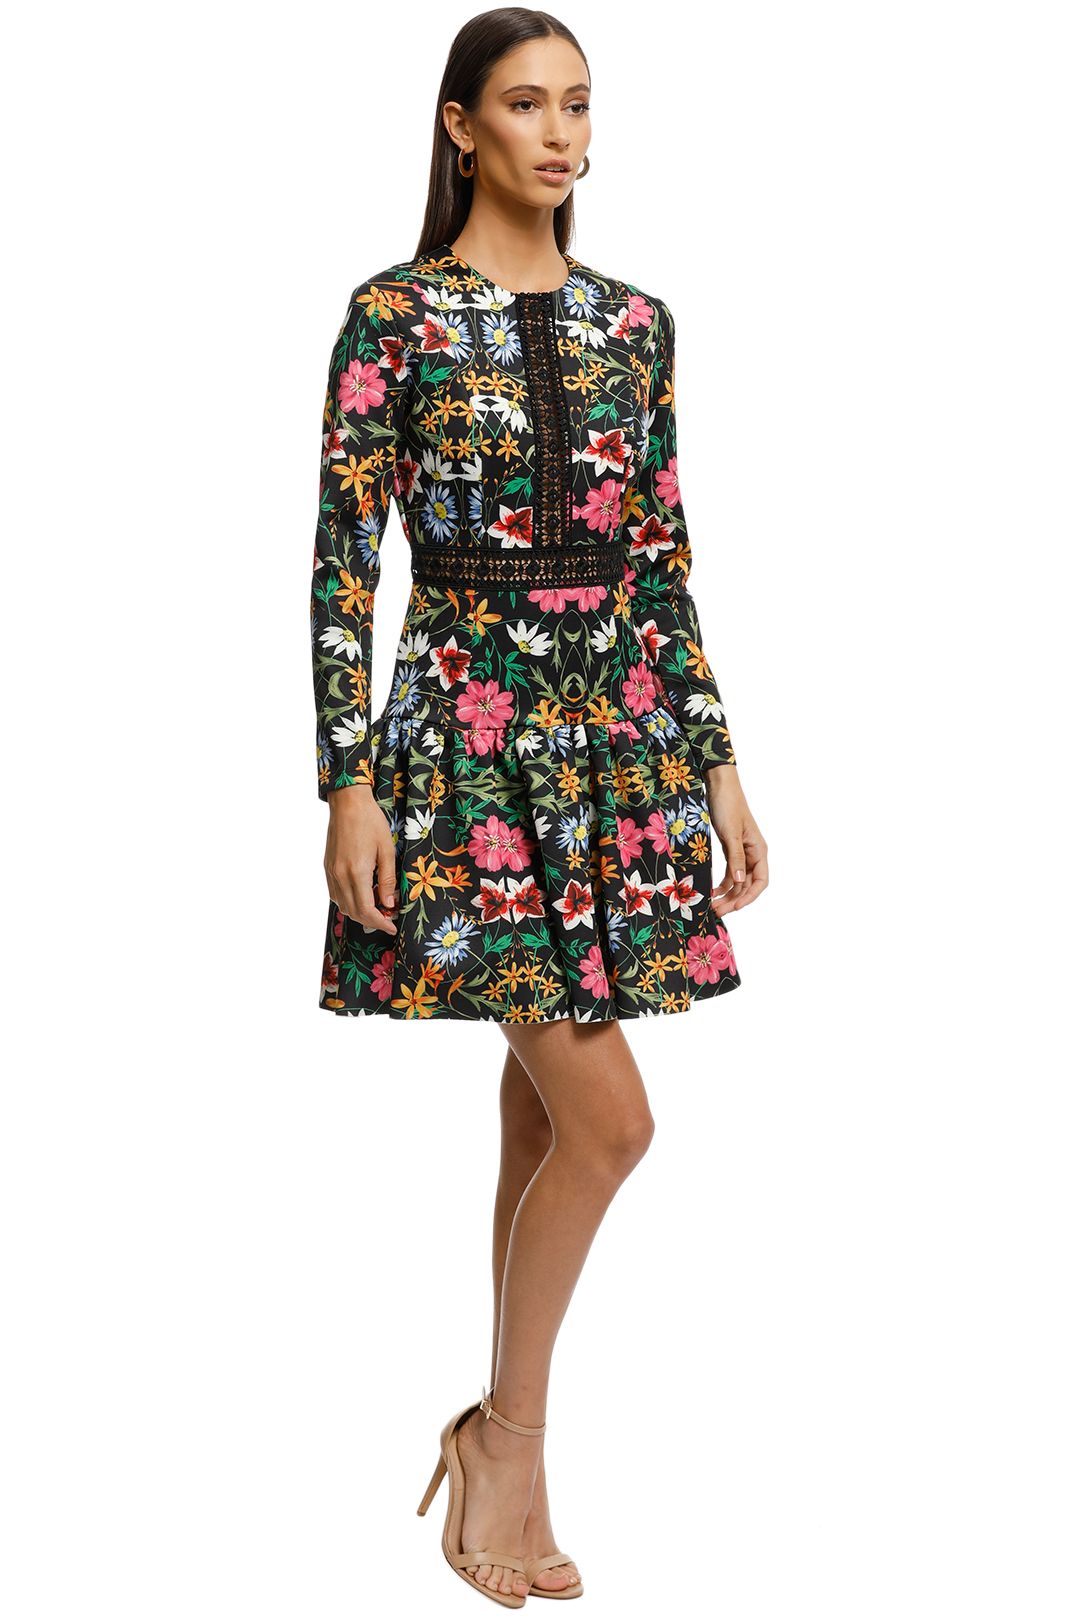 Alexia-Admor-Long-Sleeve-Lace-Knit-Trim-Floral-Print-Dress-Black-Multi-Side